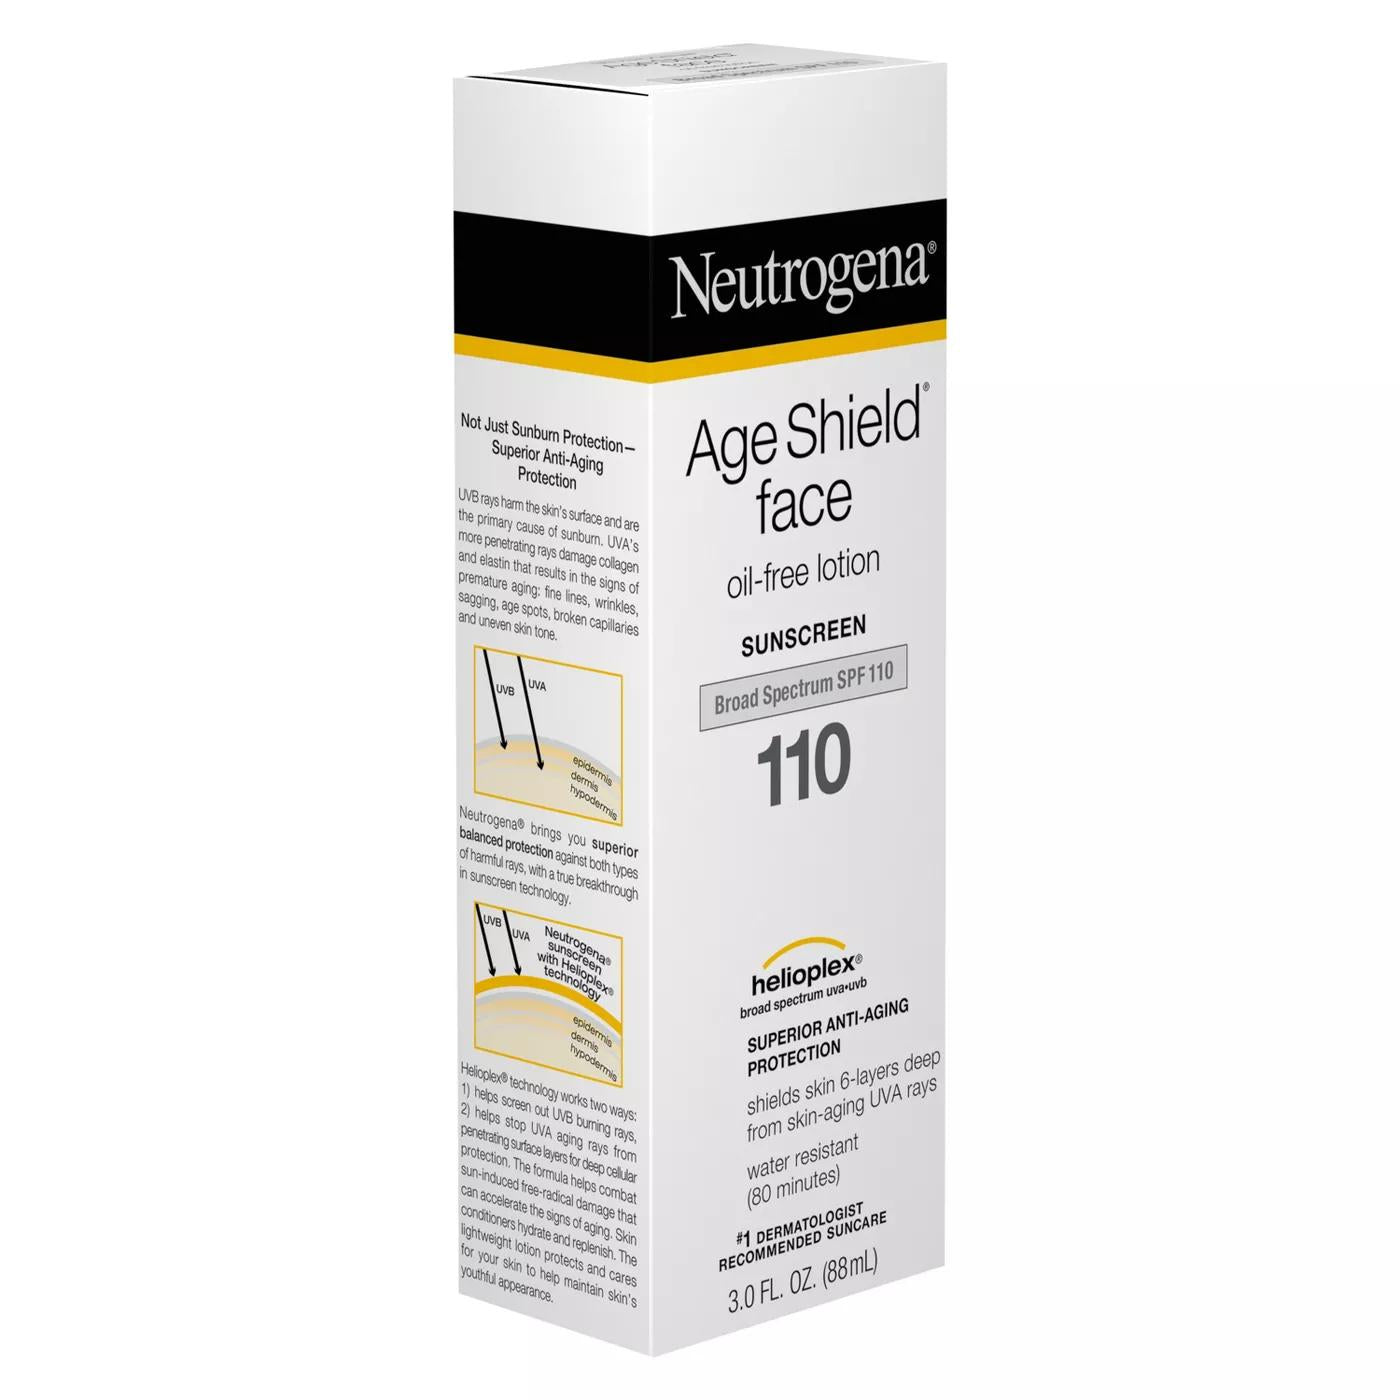 Neutrogena Age Shield Face Oil-Free Lotion Sunscreen Broad Spectrum Spf 110 3 Fl. Oz.